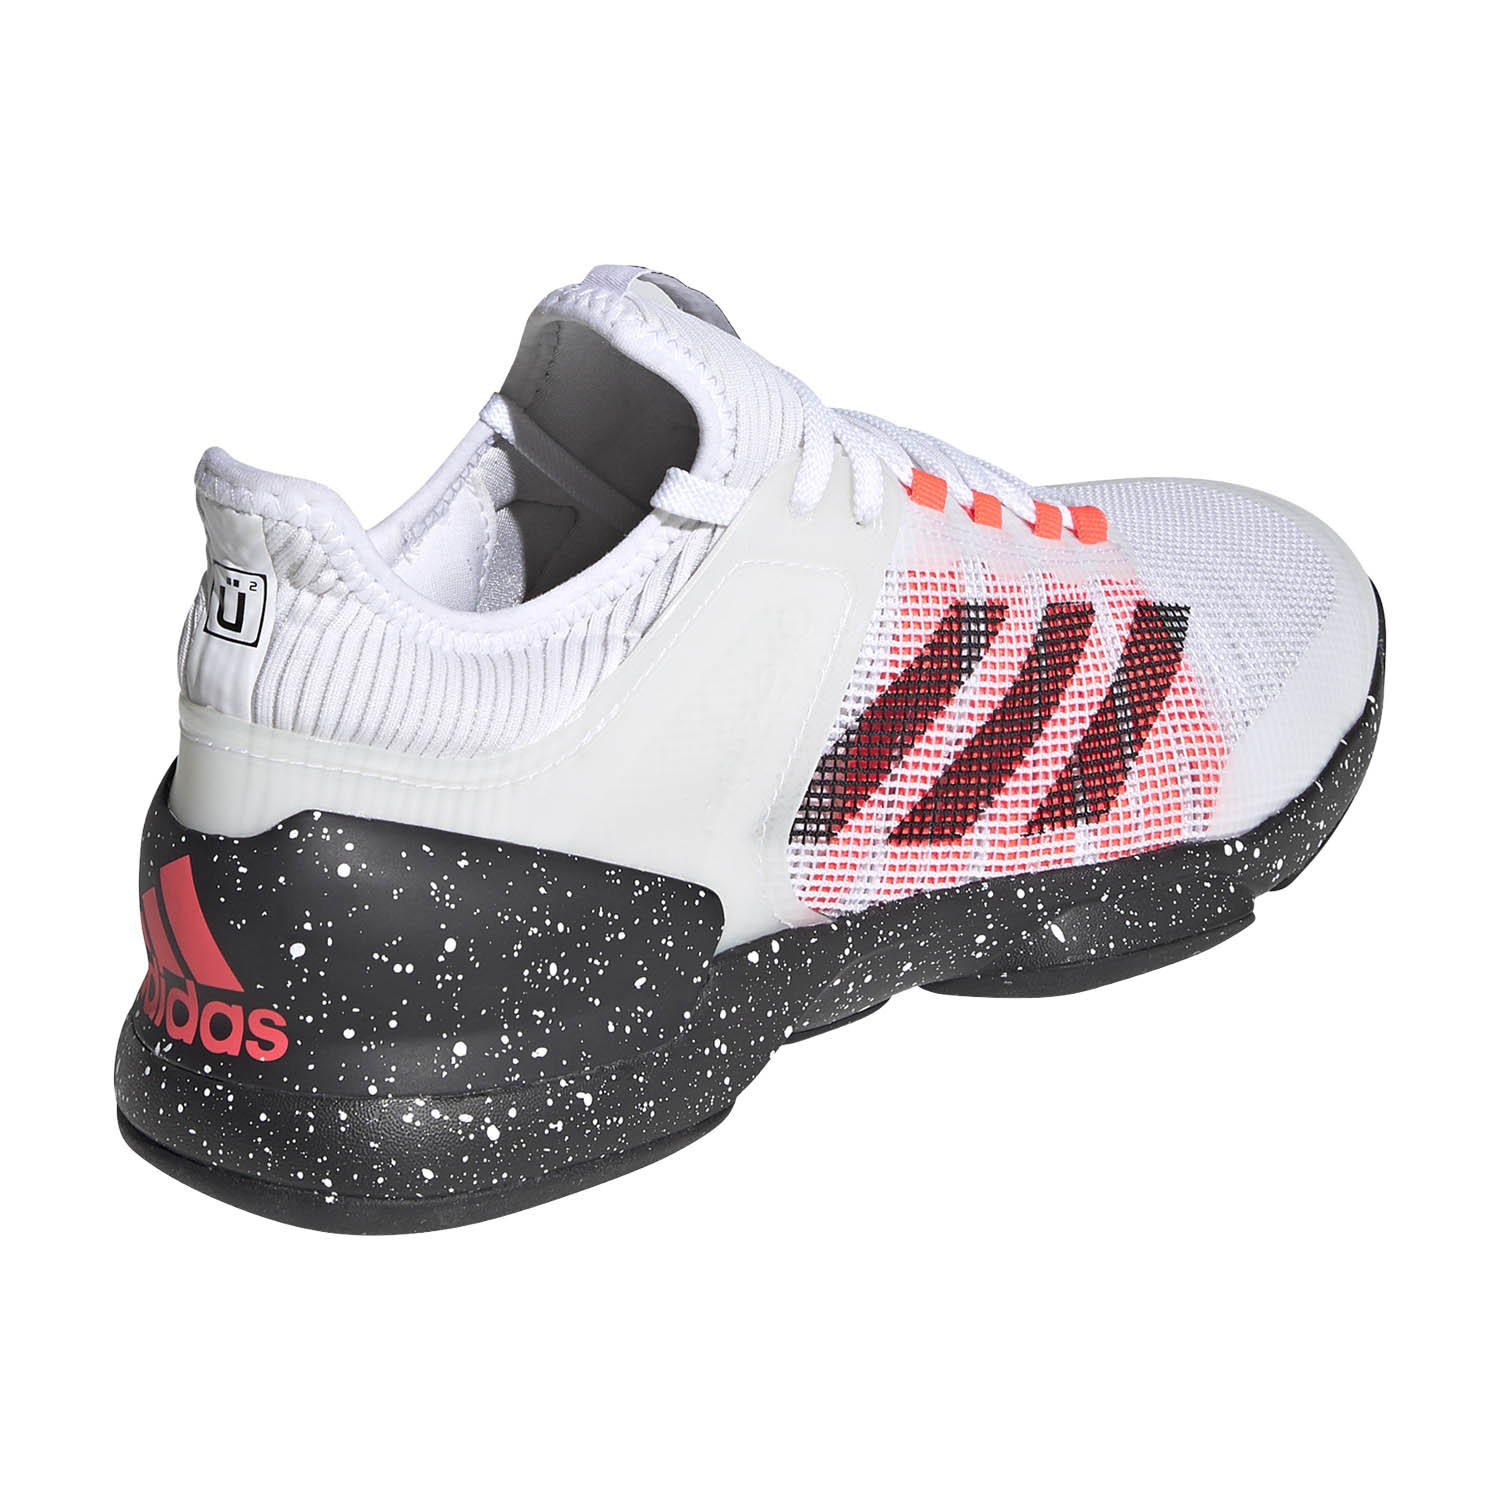 adidas Adizero Ubersonic 2 Men's Tennis Shoes - Ftwr White